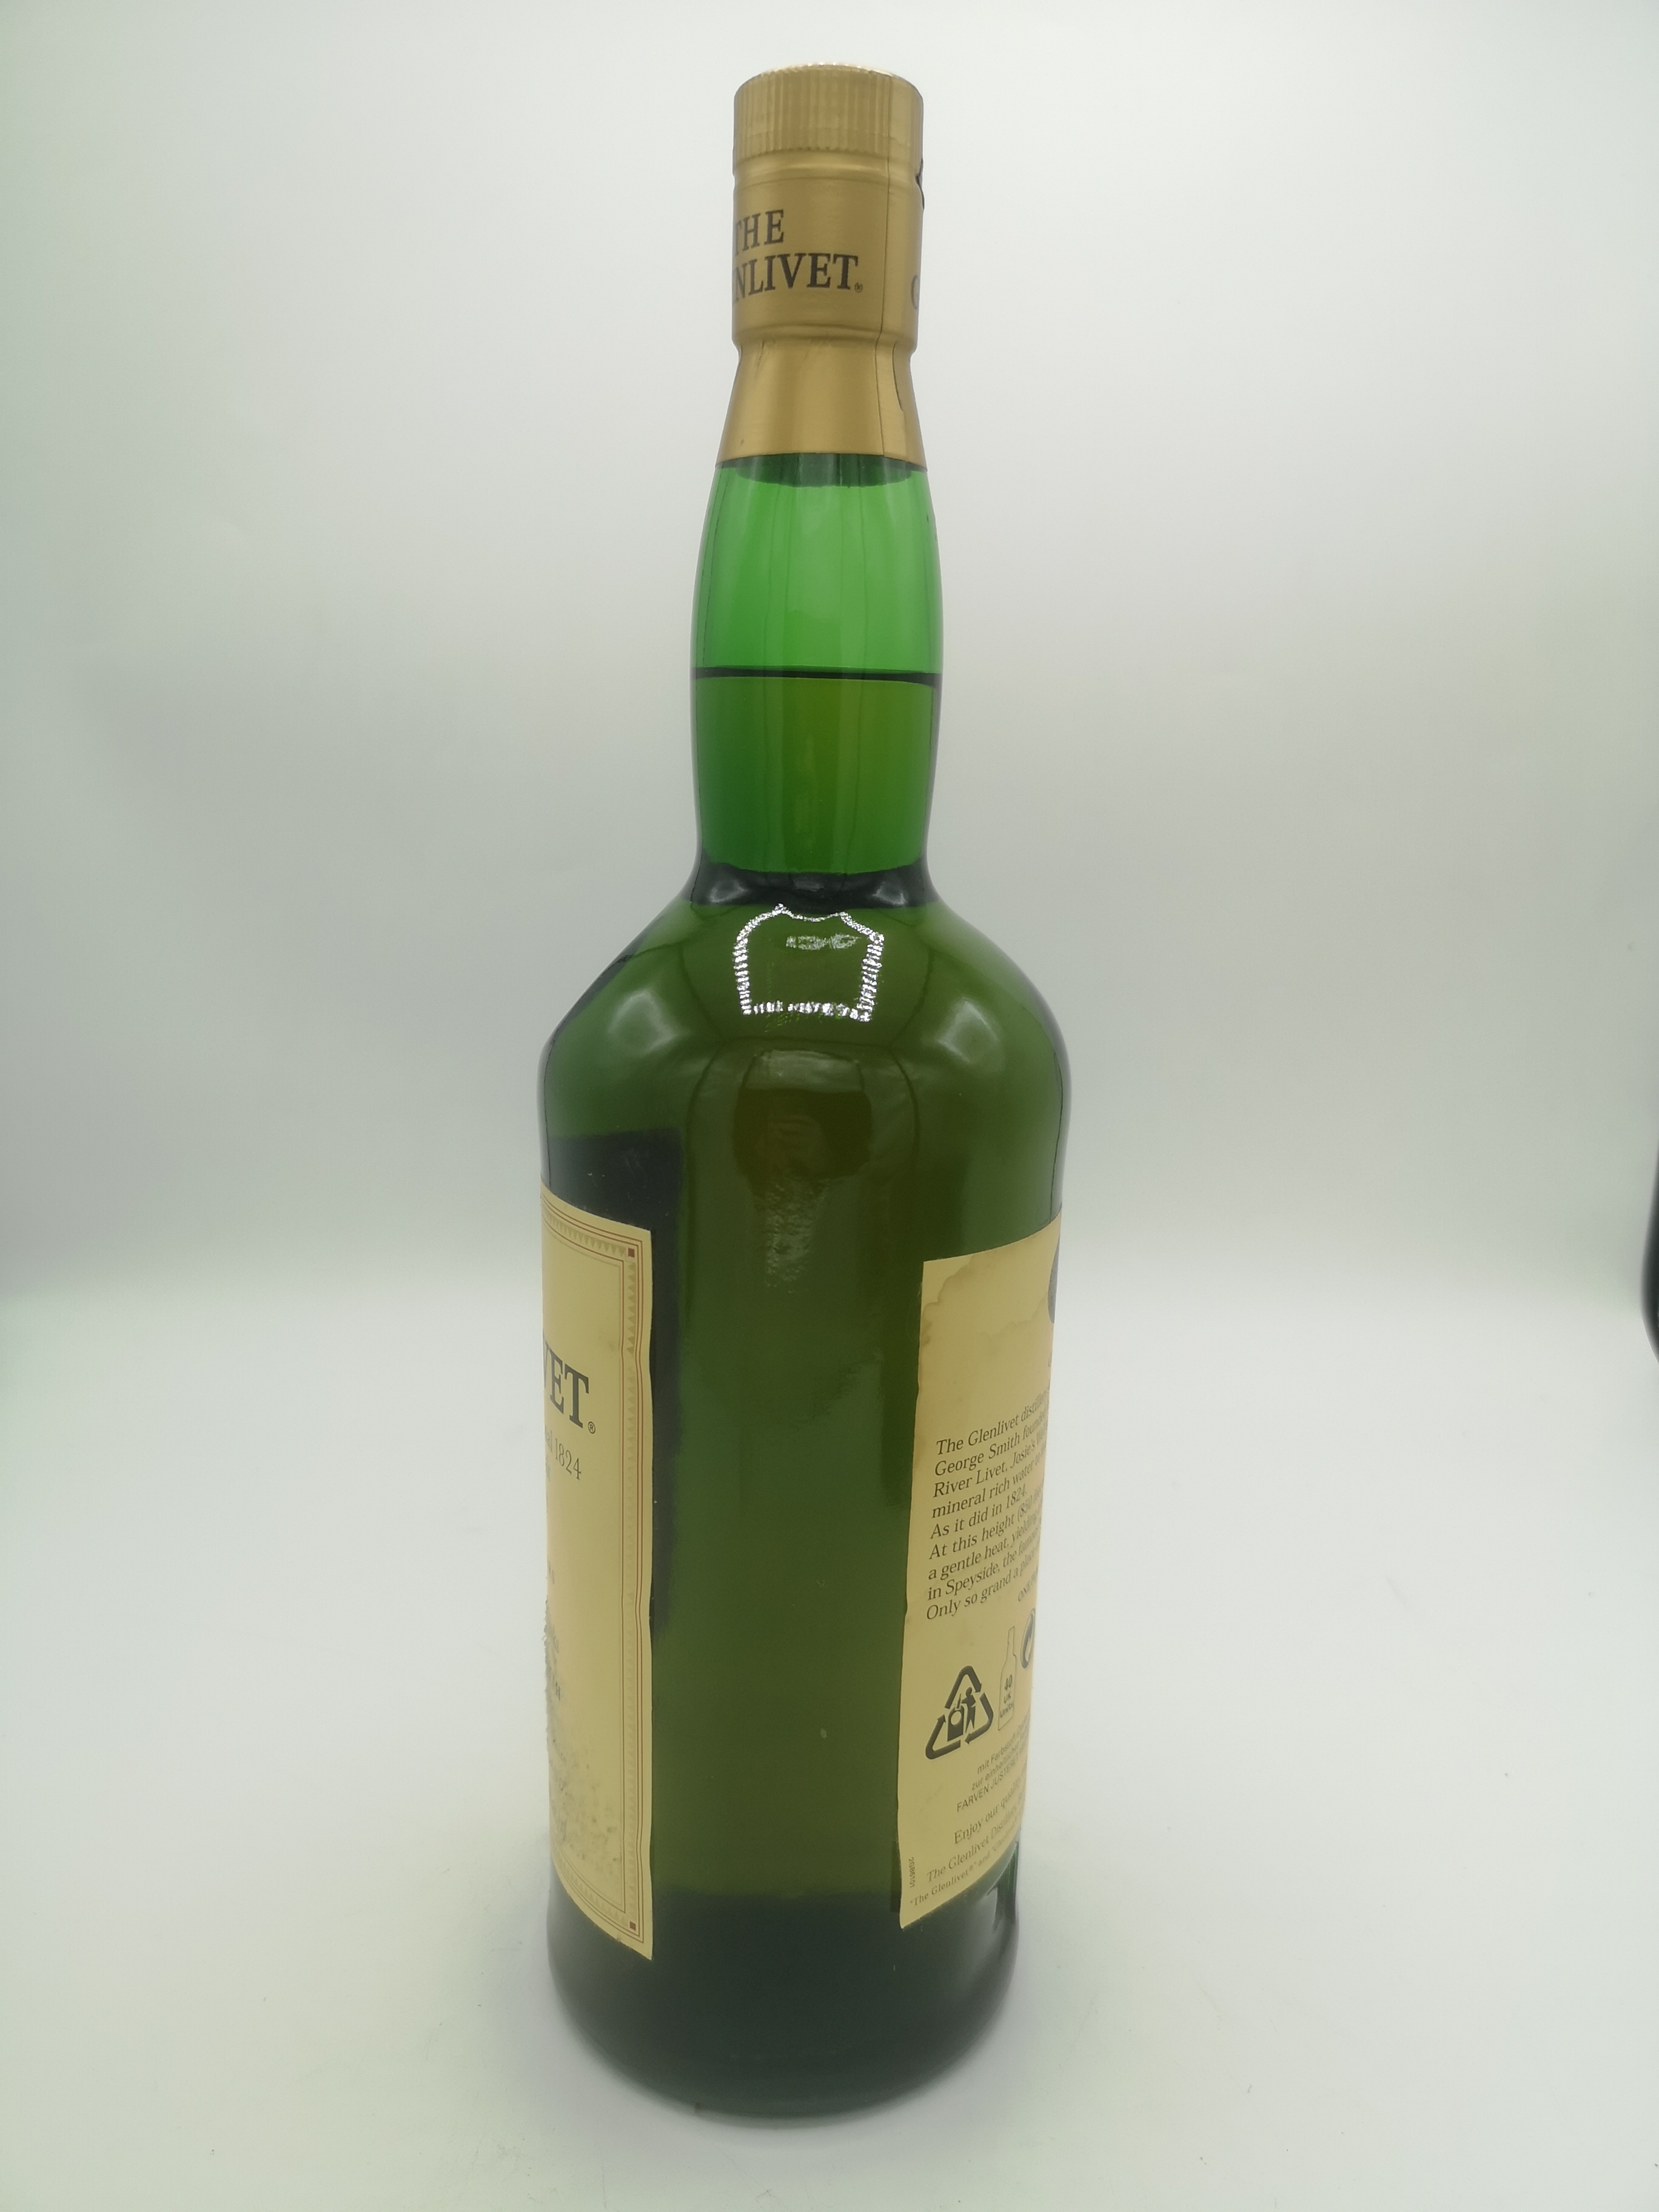 The Glenlivet, 1l pure single malt Scotch whisky - Image 2 of 8